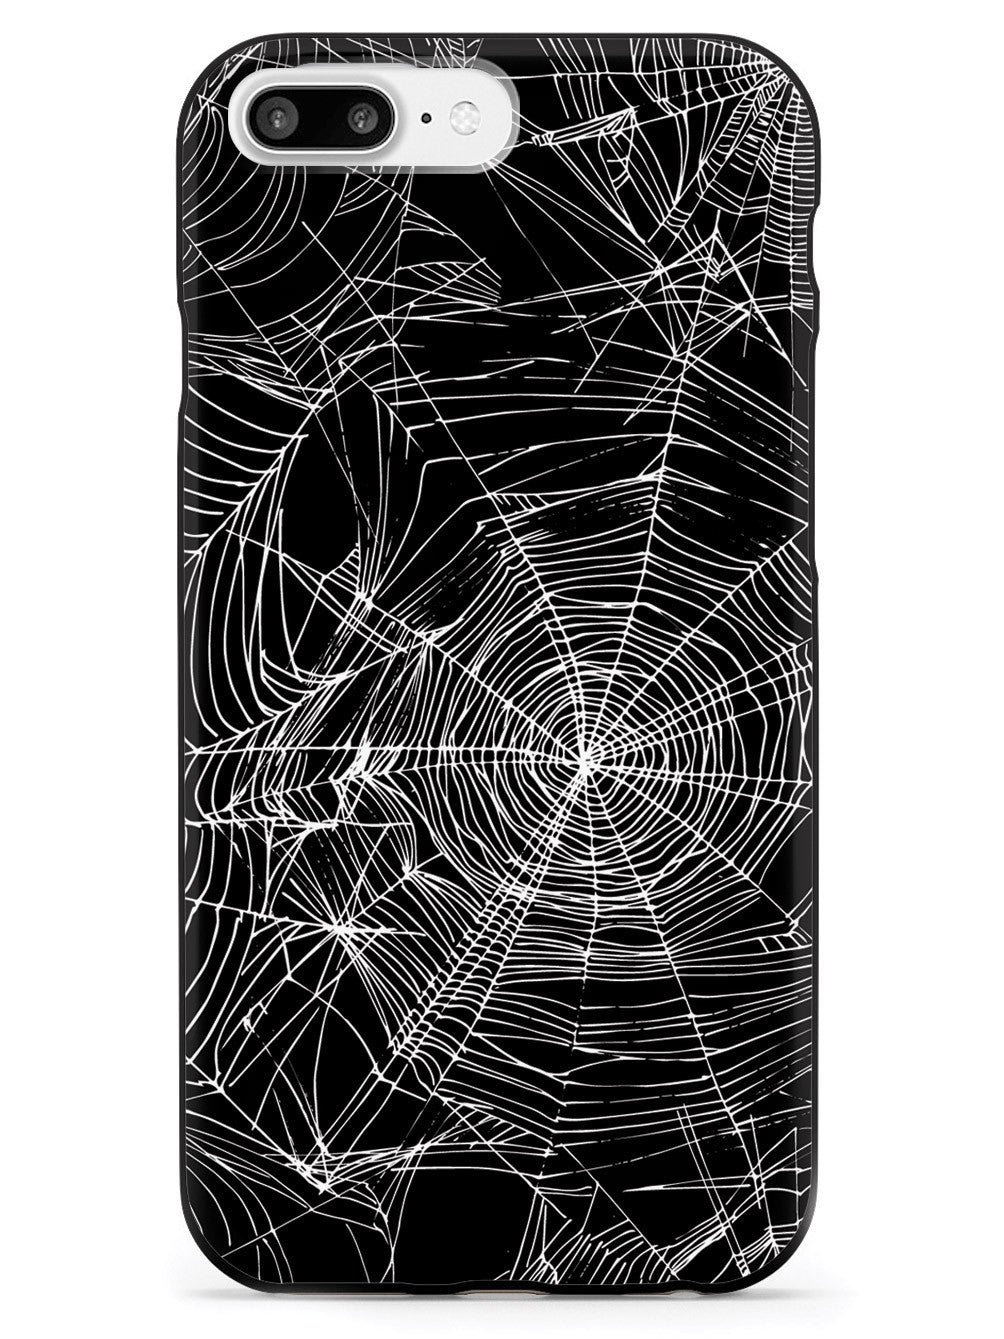 Spider Web - Black Case